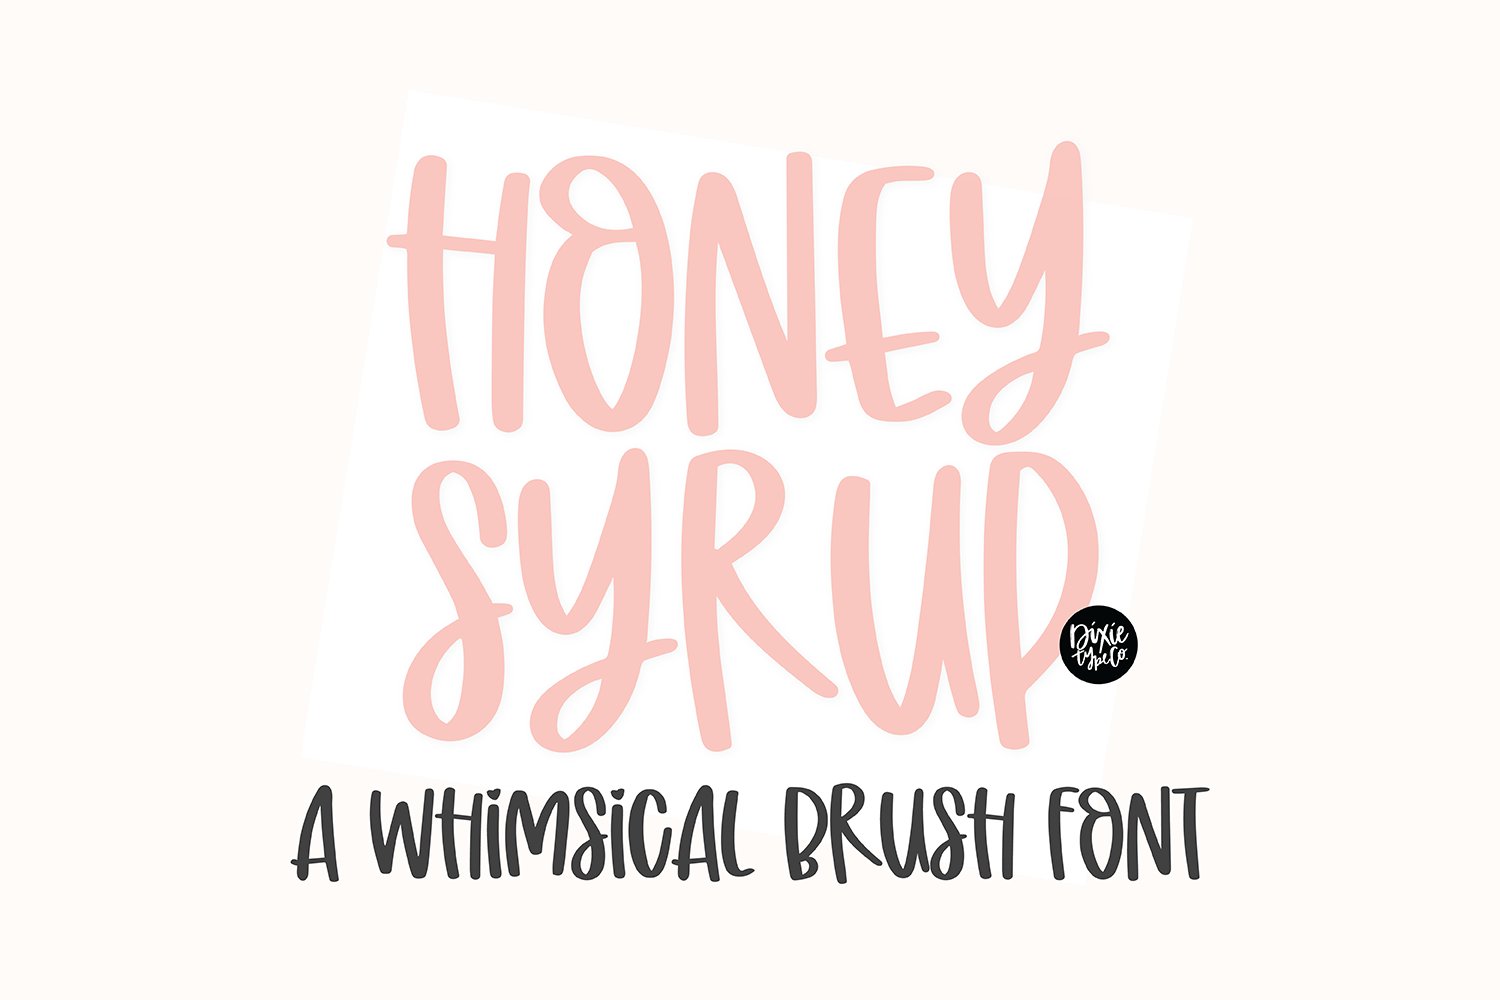 HONEY SYRUP Brush Font cover image.